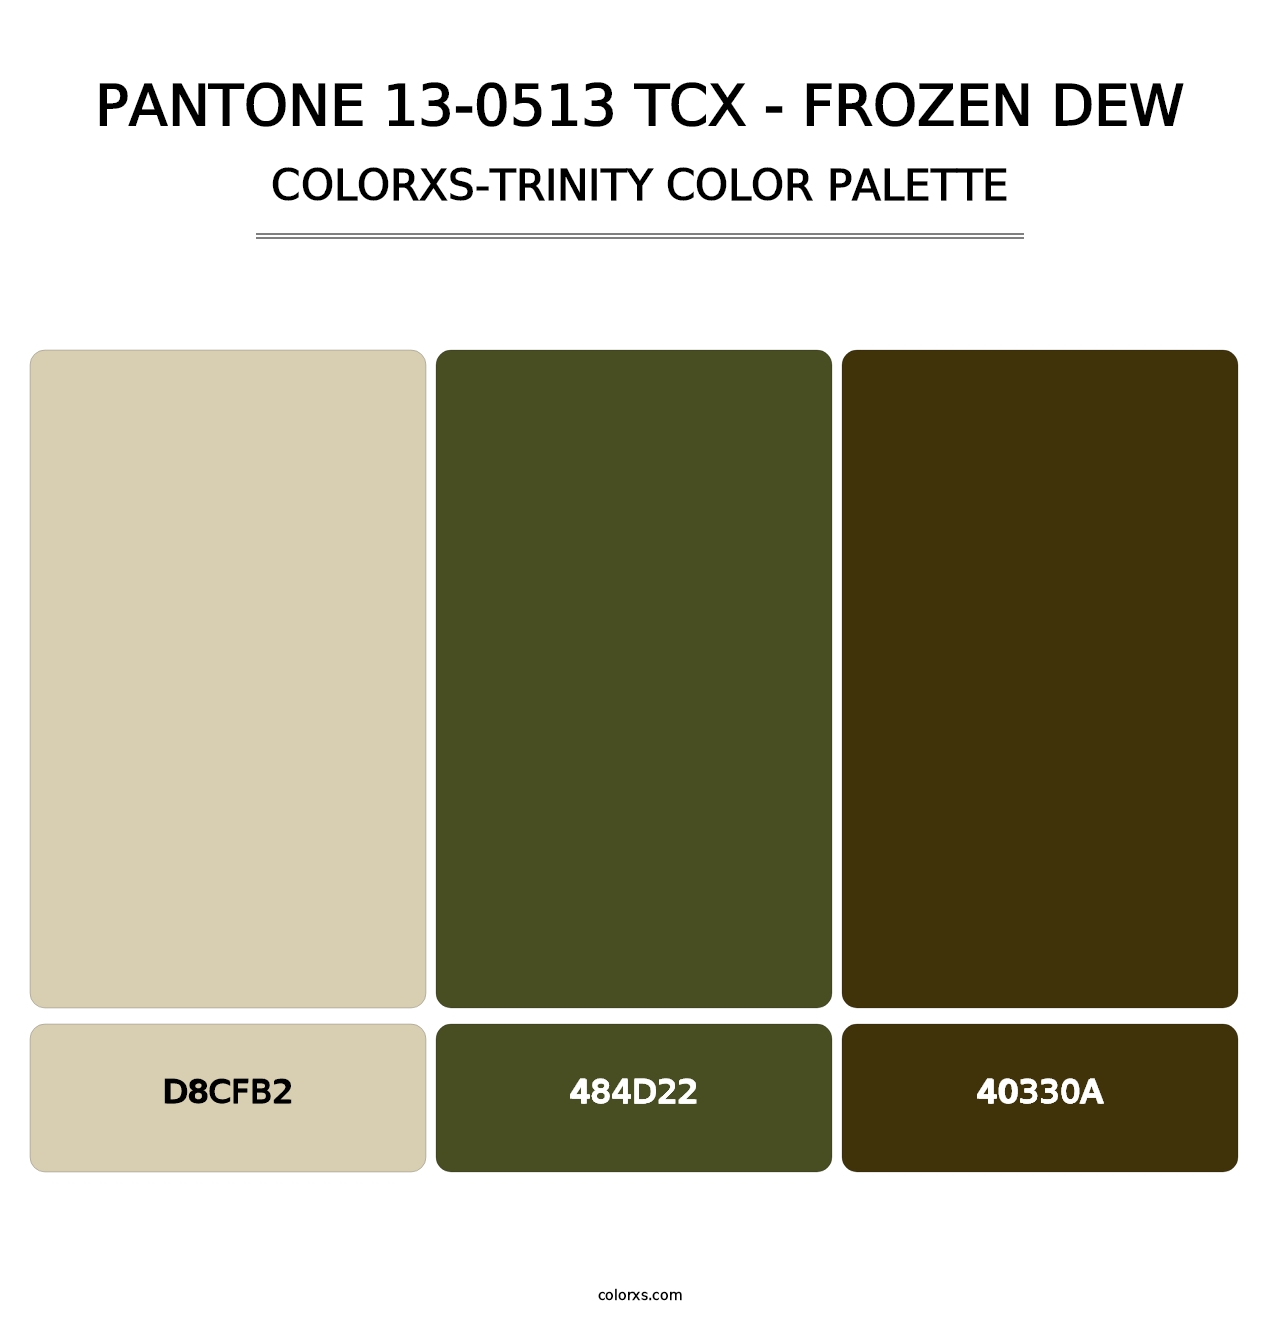 PANTONE 13-0513 TCX - Frozen Dew - Colorxs Trinity Palette